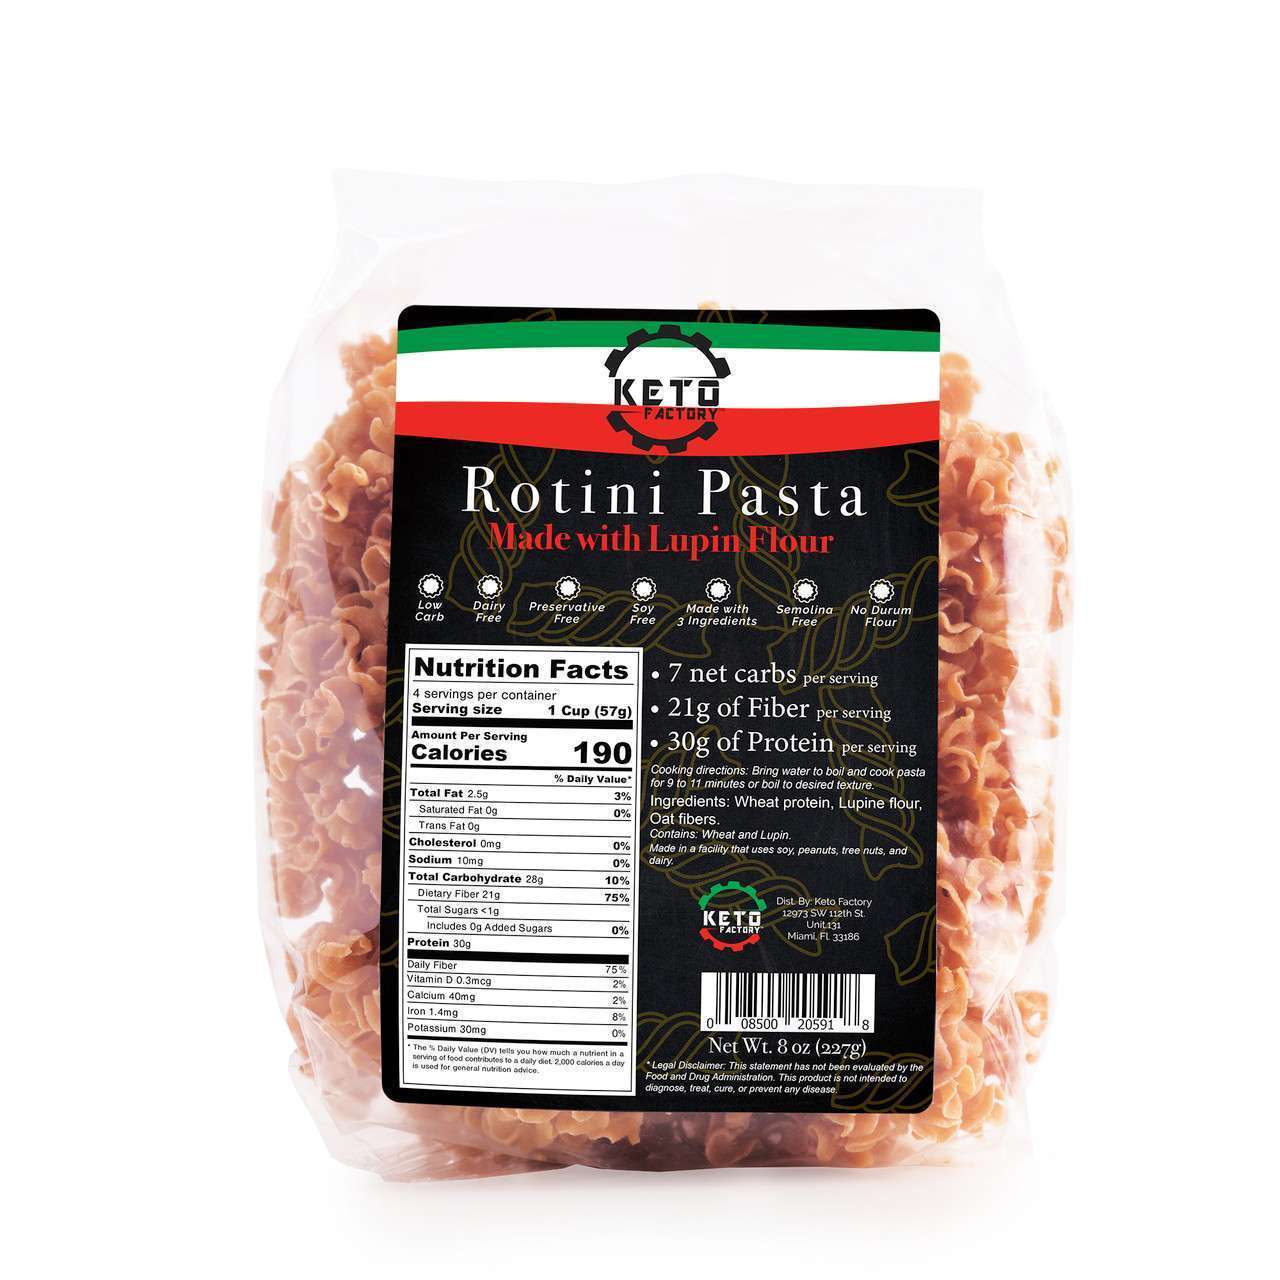 Keto Rotini Pasta 8 oz Made from Lupin Flour - ketofactory